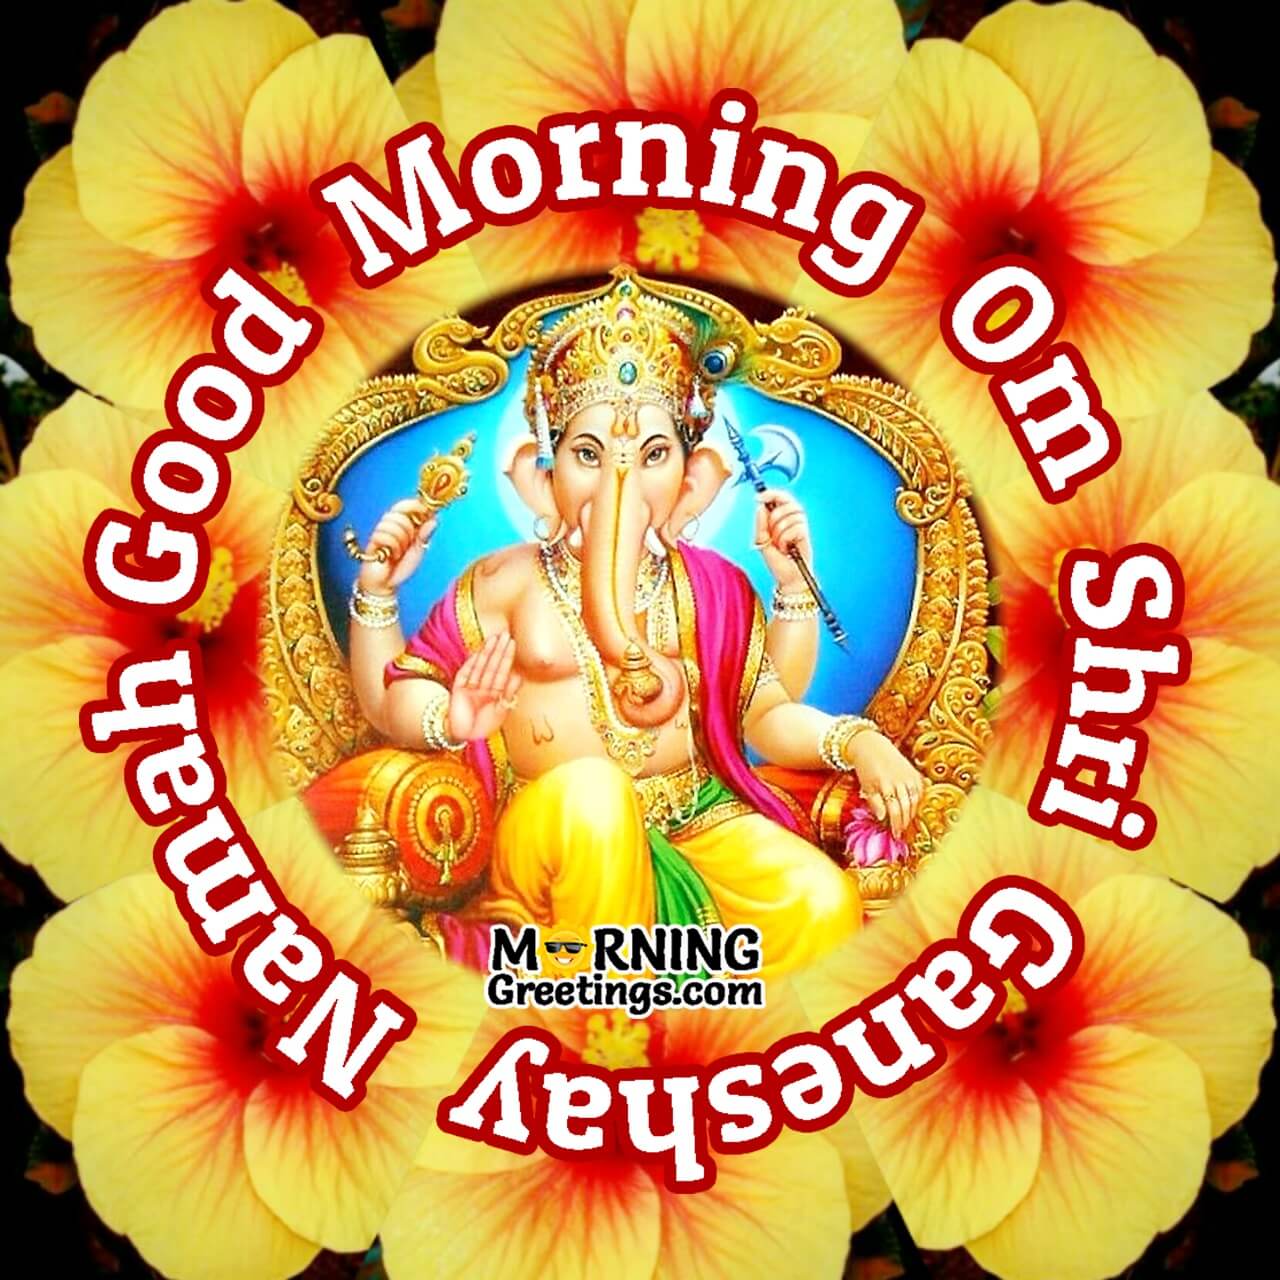 10 Morning Ganesha Greetings For You - Morning Greetings – Morning ...